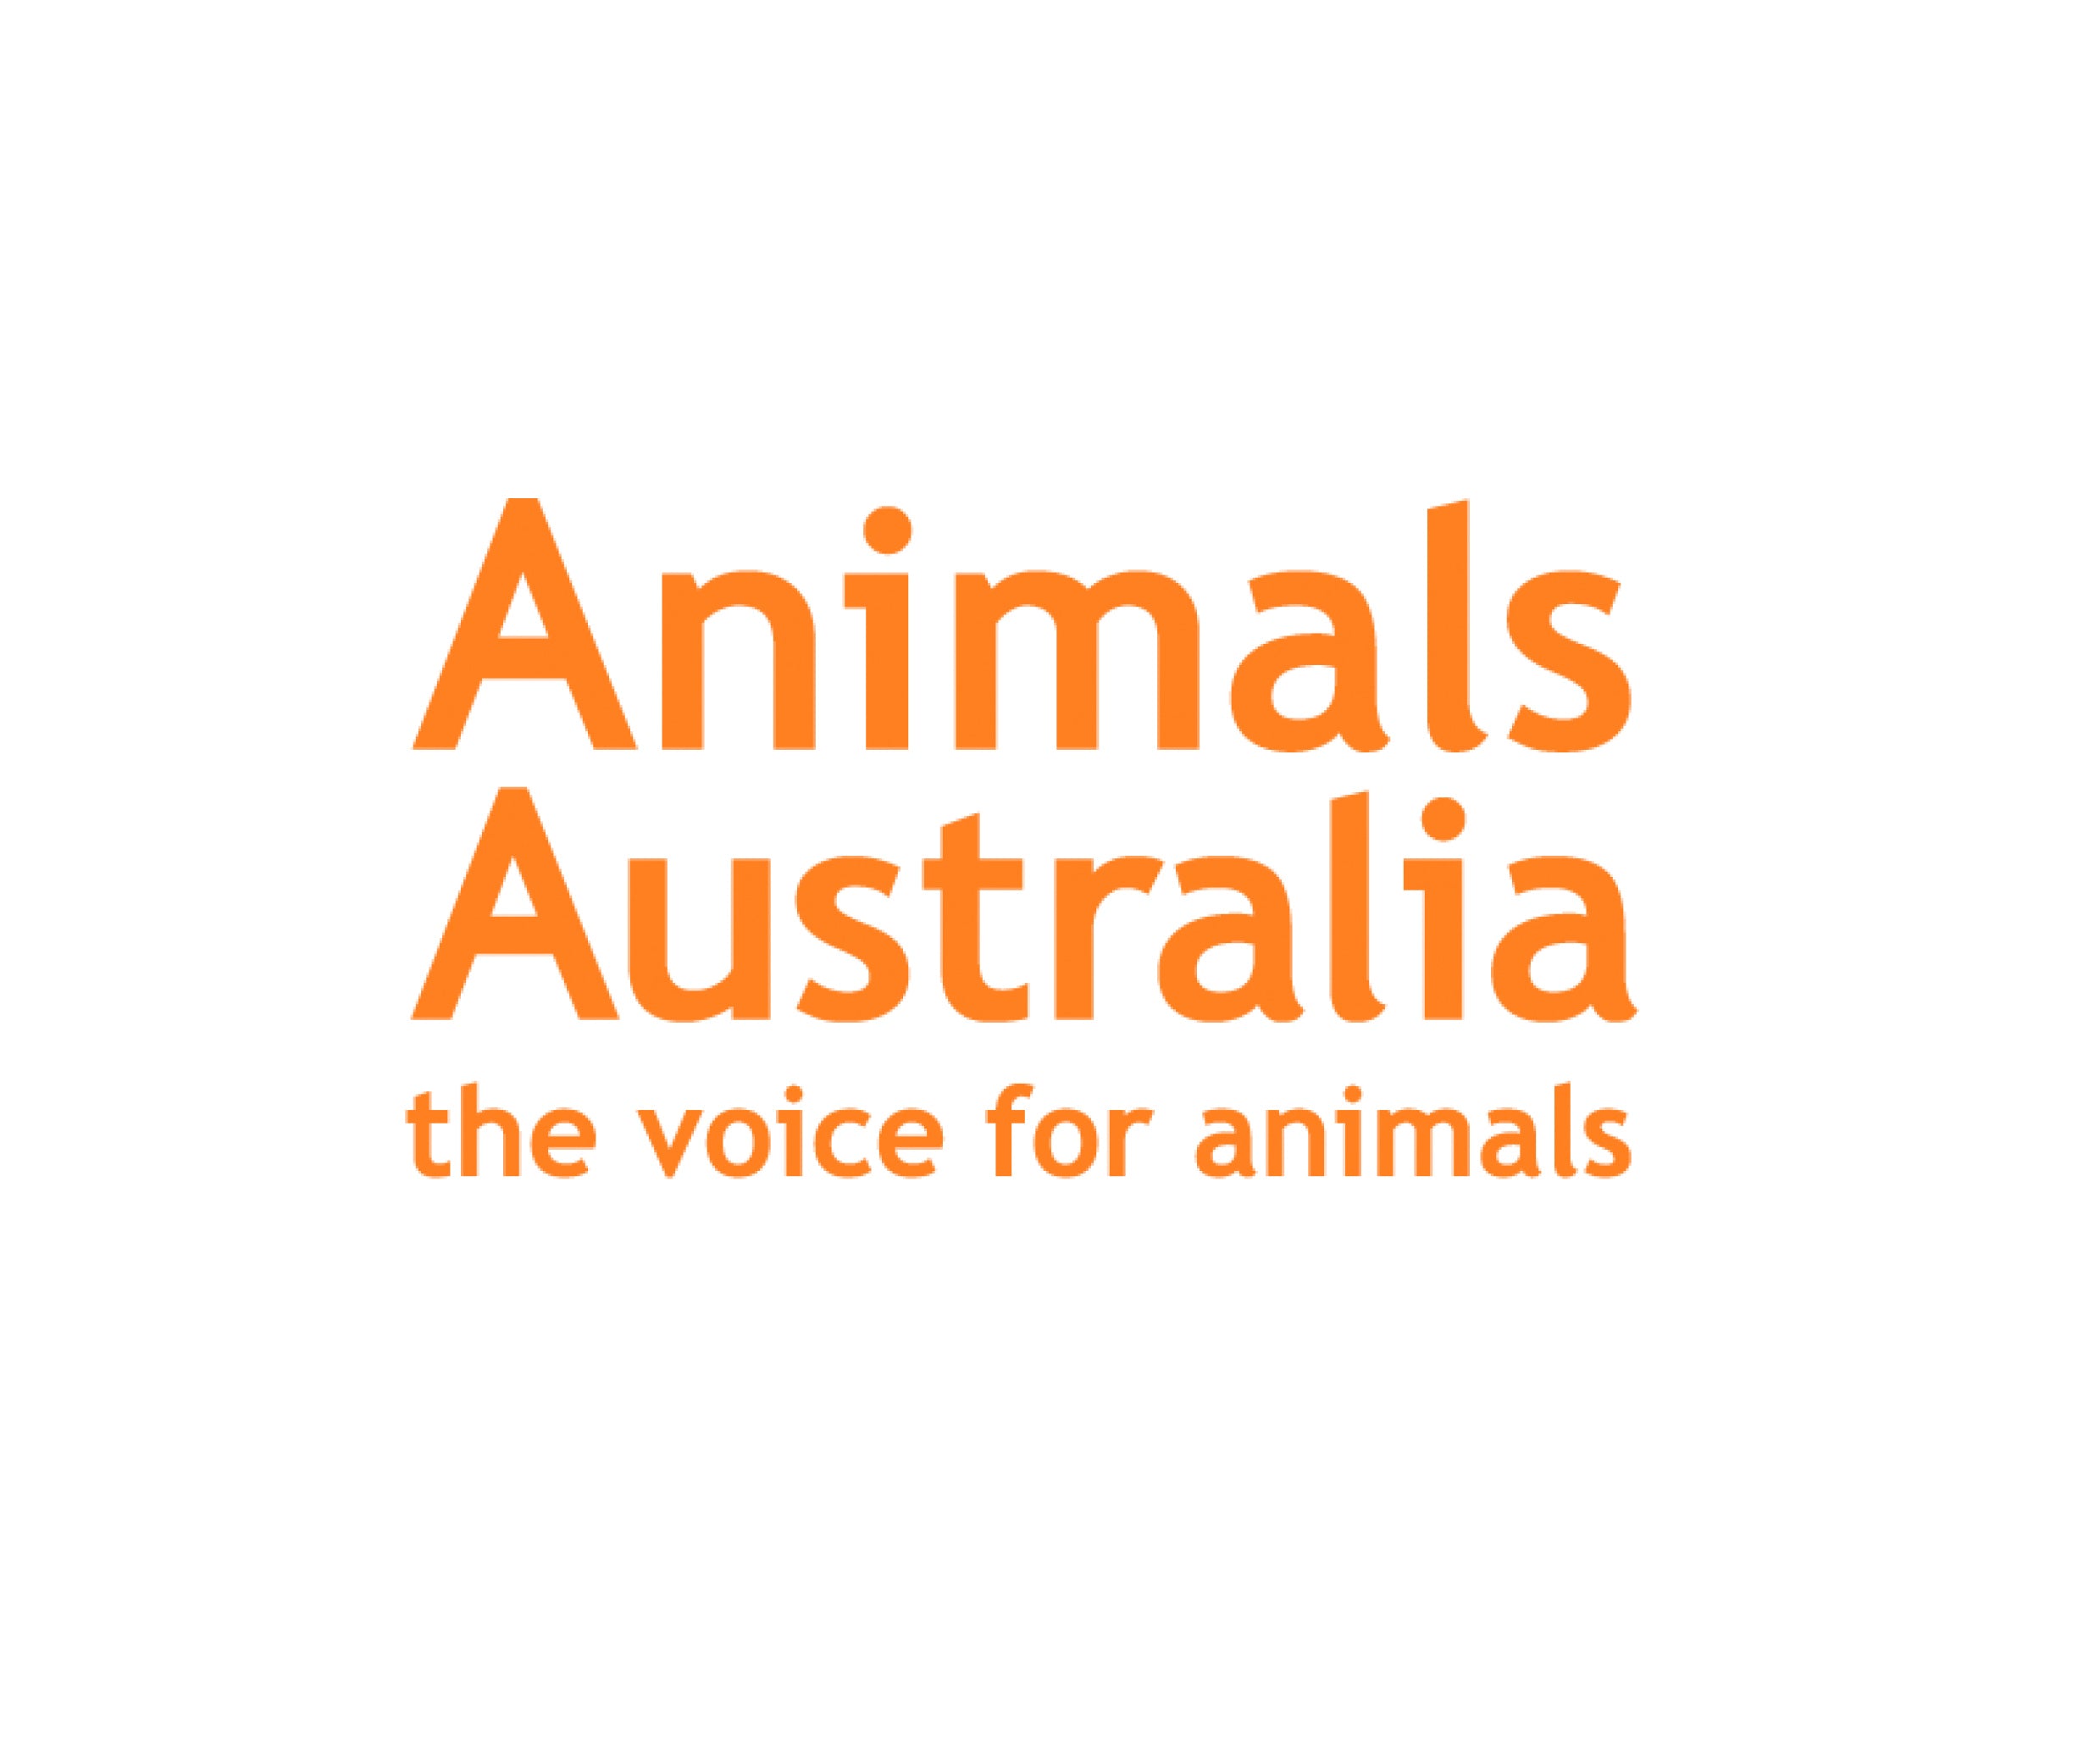 ANIMALS AUSTRALIA